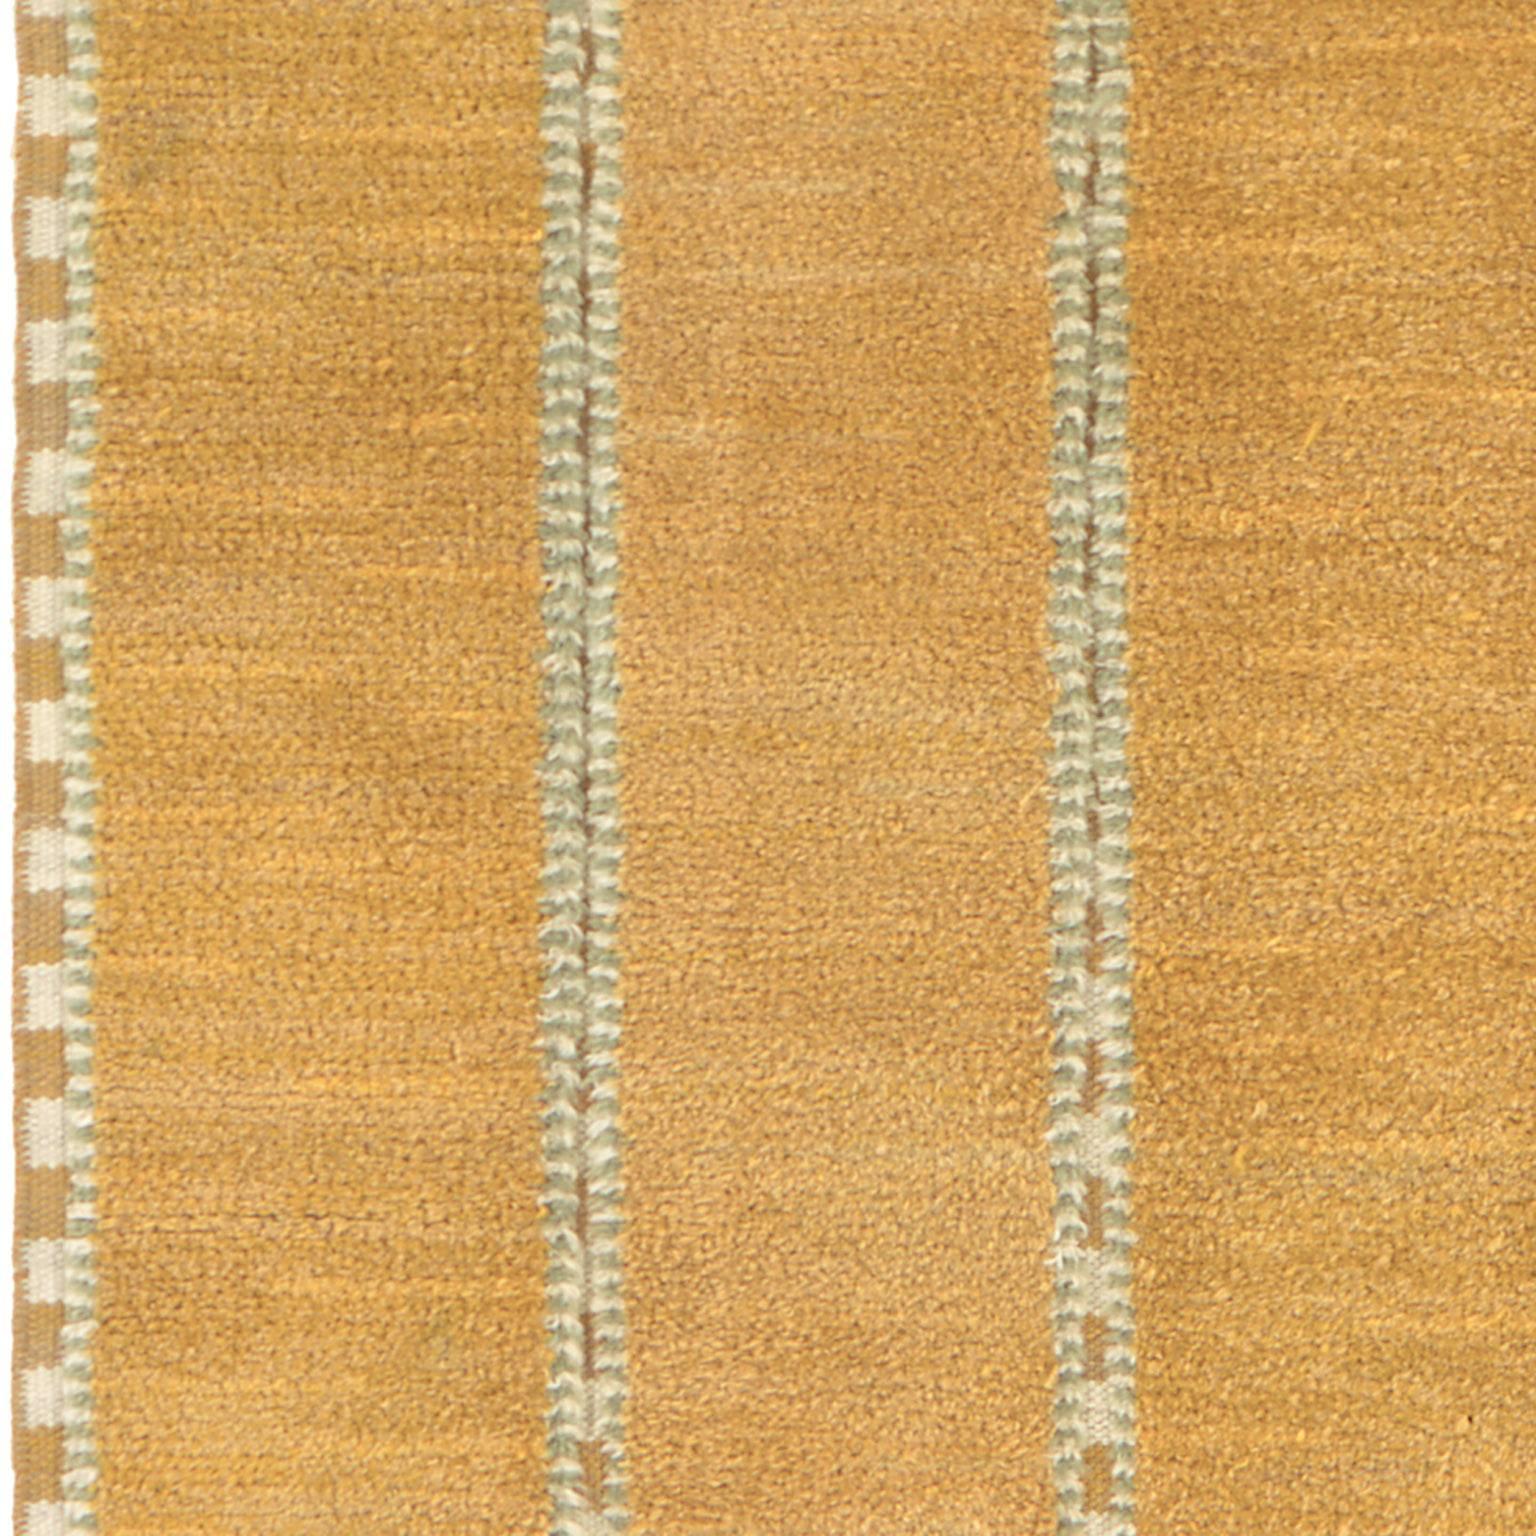 Swedish pile carpet, initialed AB MMF, BN (Barbro Nilsson, AB Marta Maas-Fjetterström).